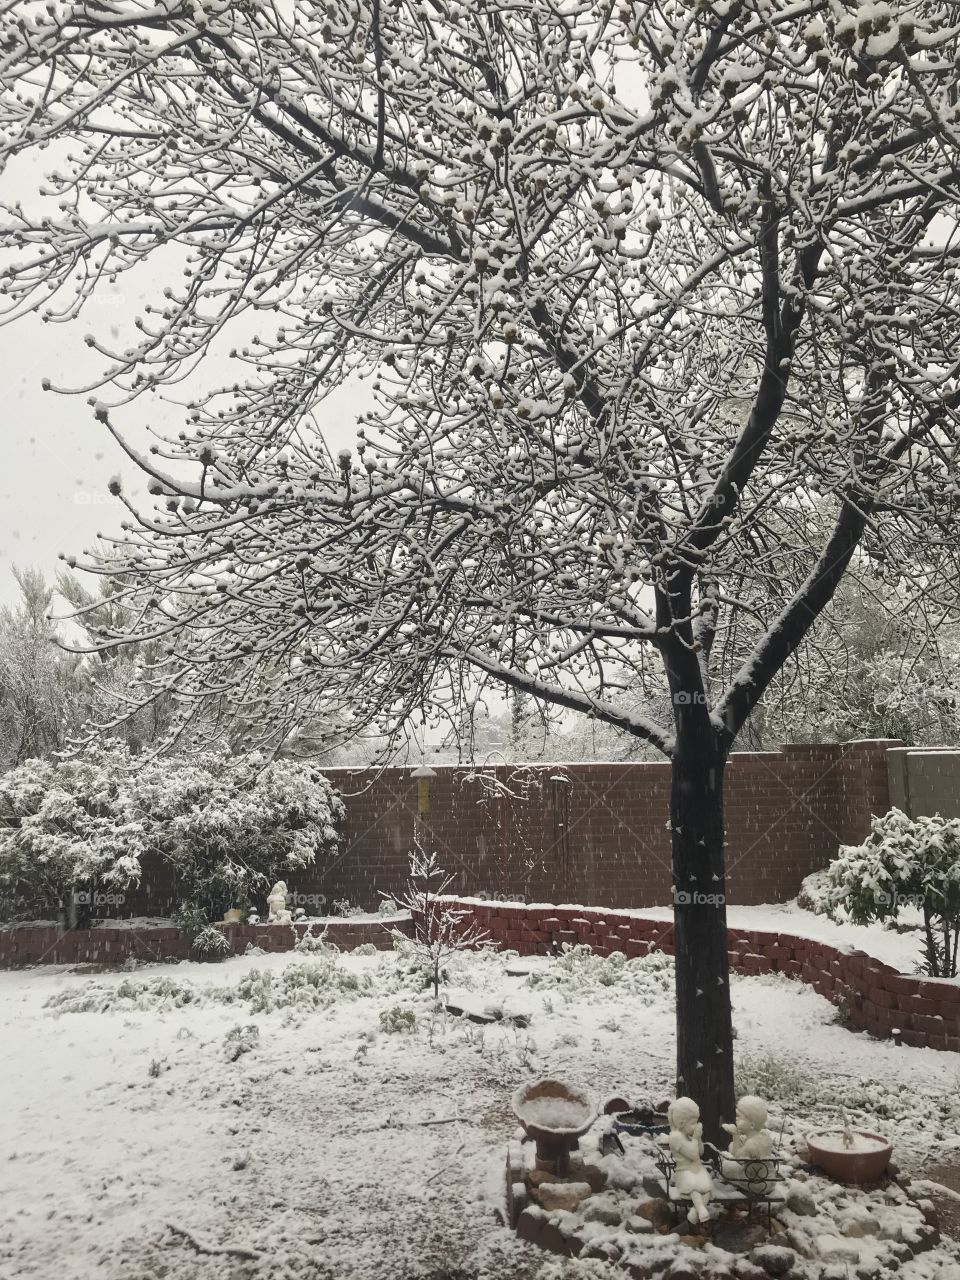 Tucson Arizona 2019 snow day